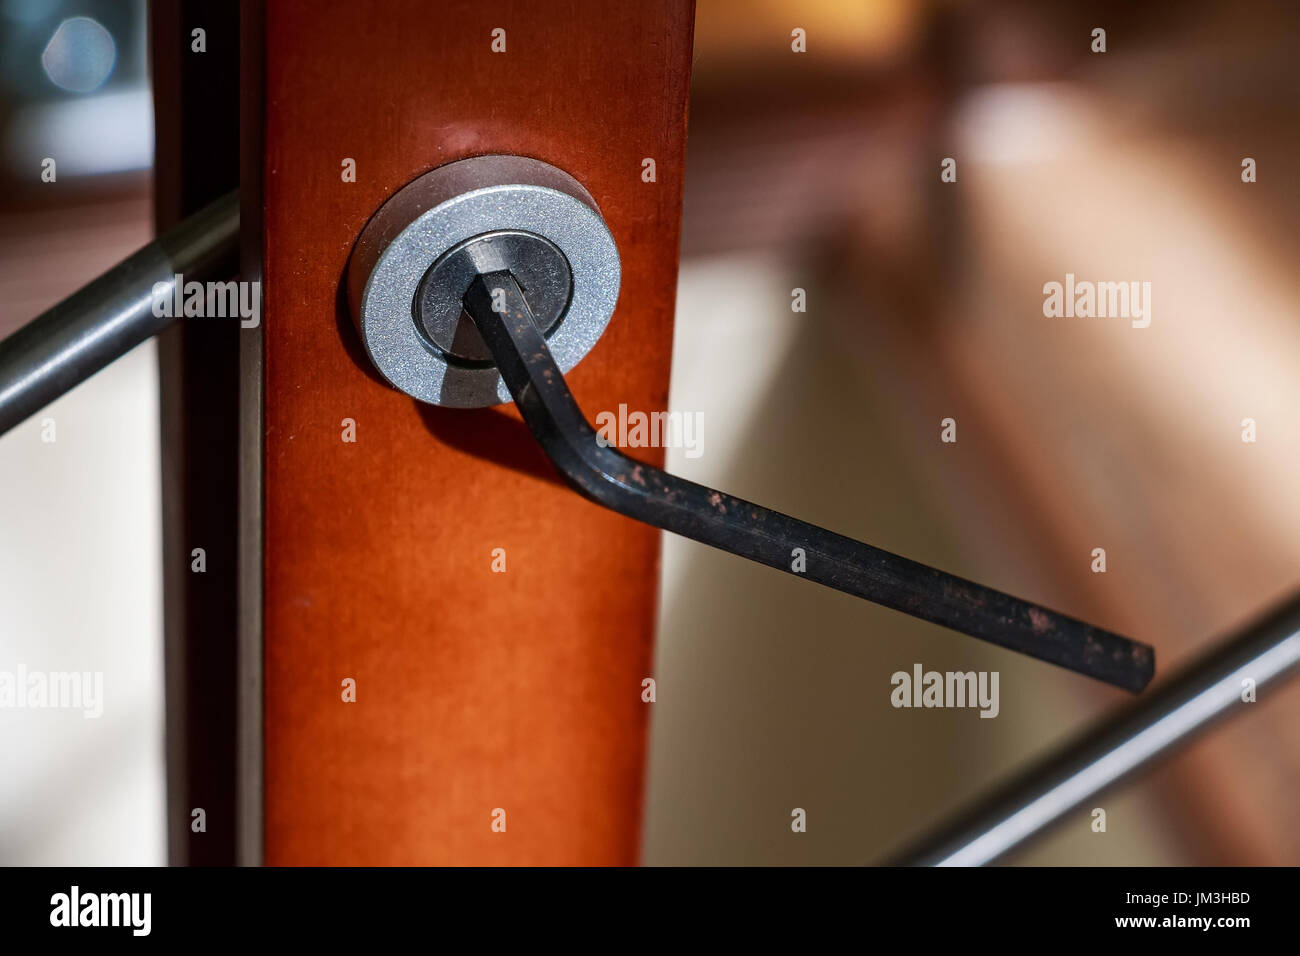 Metall Sechskant Schlüssel Loch im Möbel hautnah Stockfotografie - Alamy